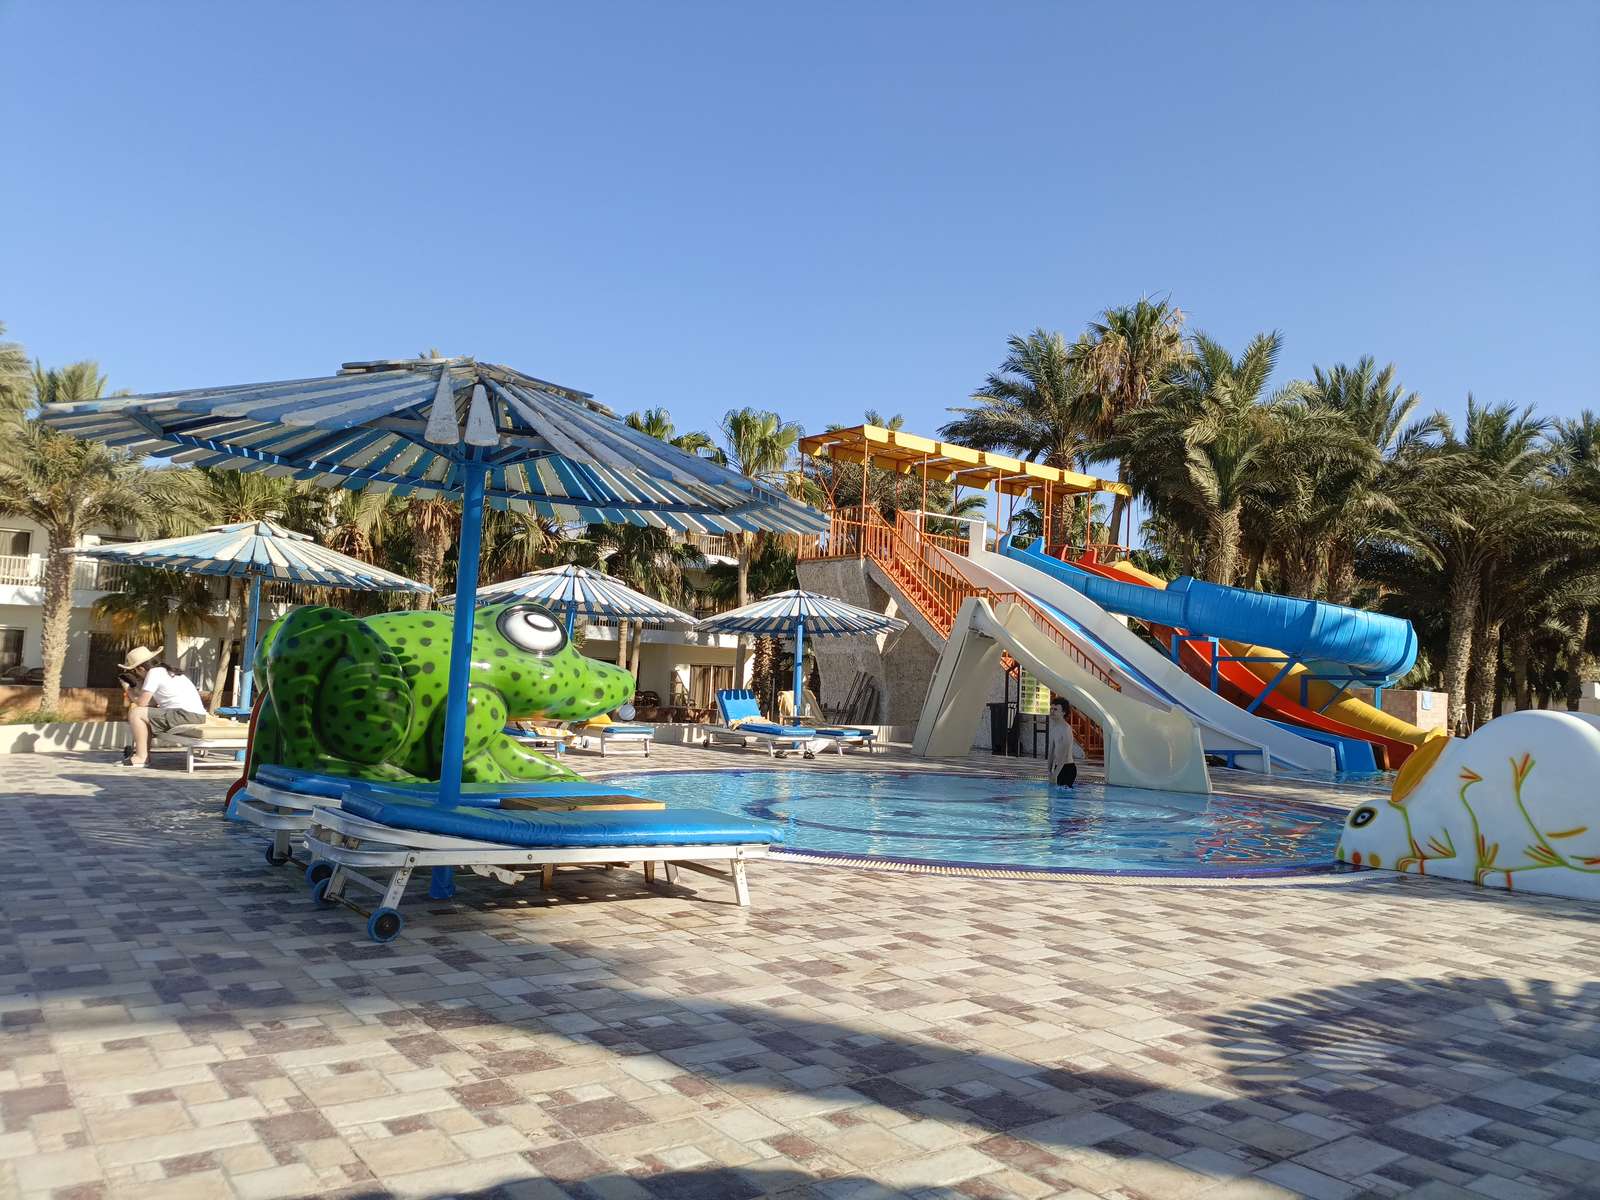 Zwembad in Hurghada online puzzel